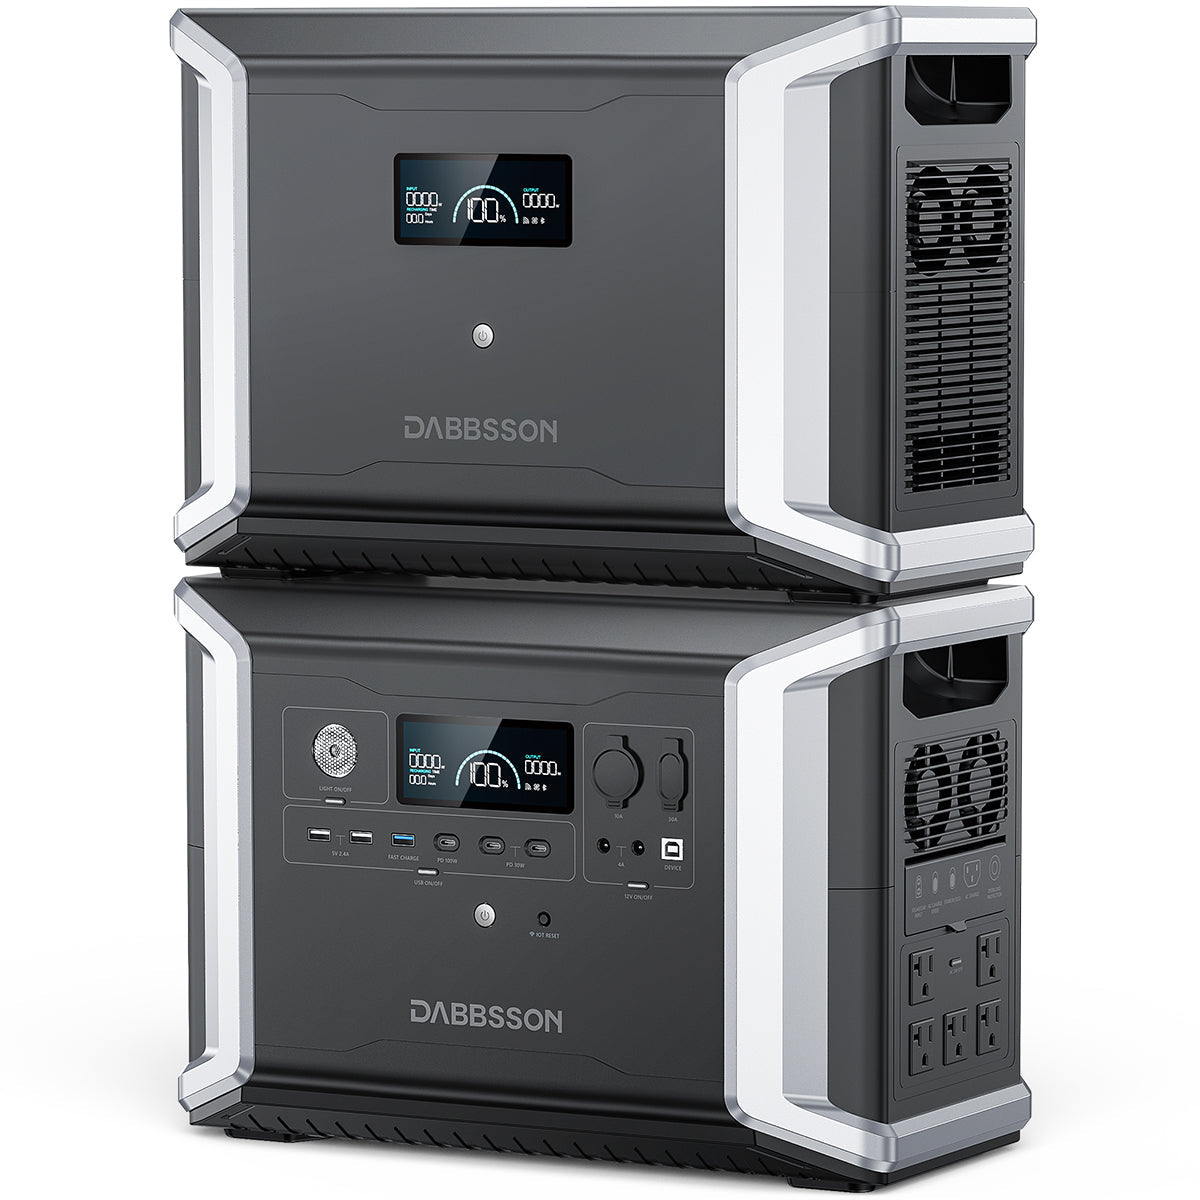 Dabbsson DBS3000B 容量拡張バッテリー DBS2300 & DBS2300 Plus 専用のエクストラバッテリー 3000Wh